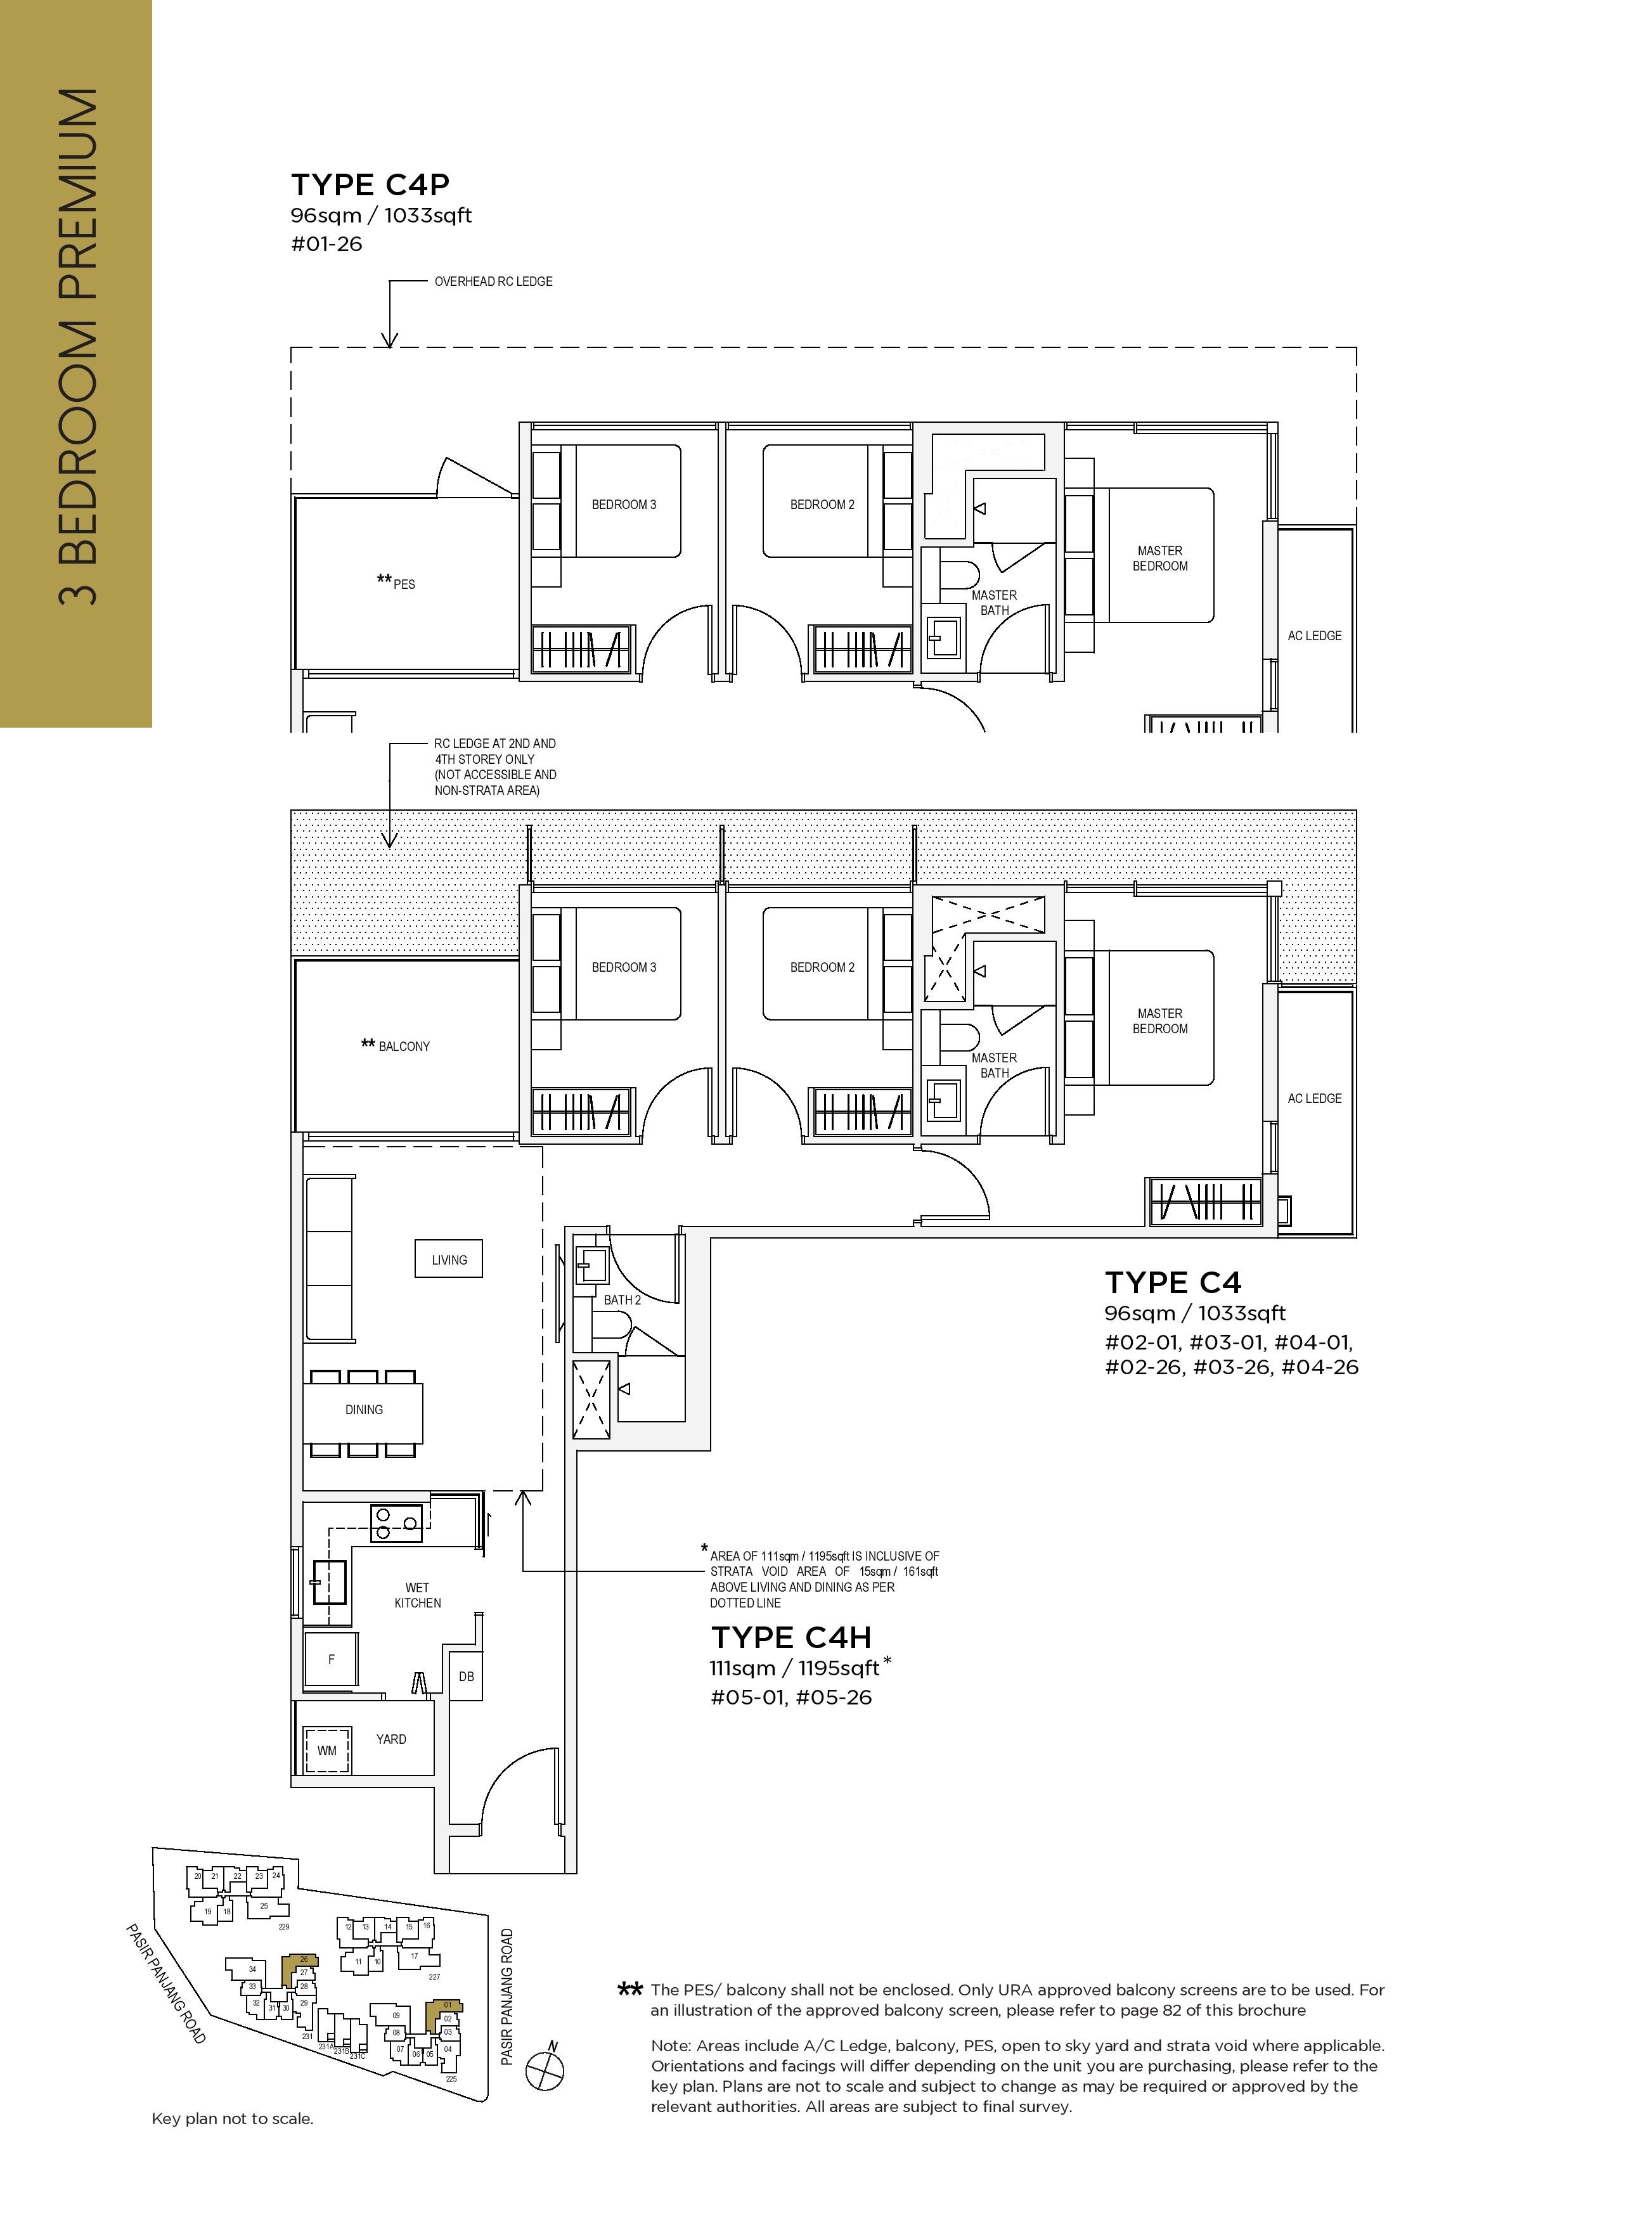 The Verandah Residences 3 Bedroom Floor Plans Type C4, C4H, C4P